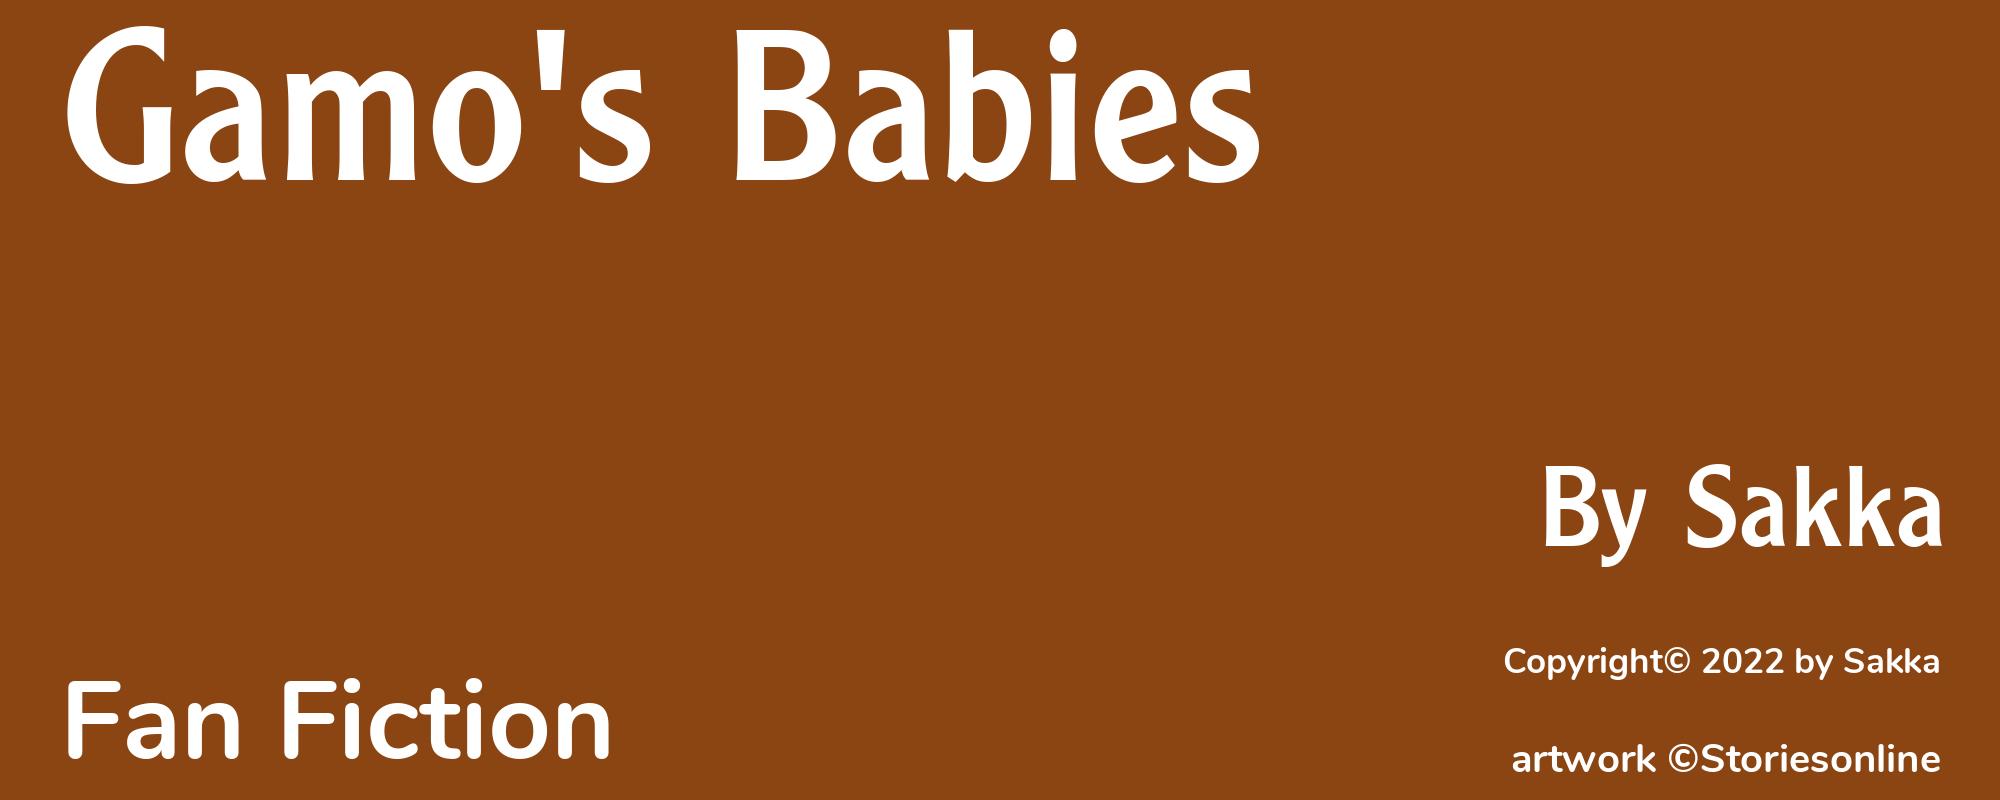 Gamo's Babies - Cover